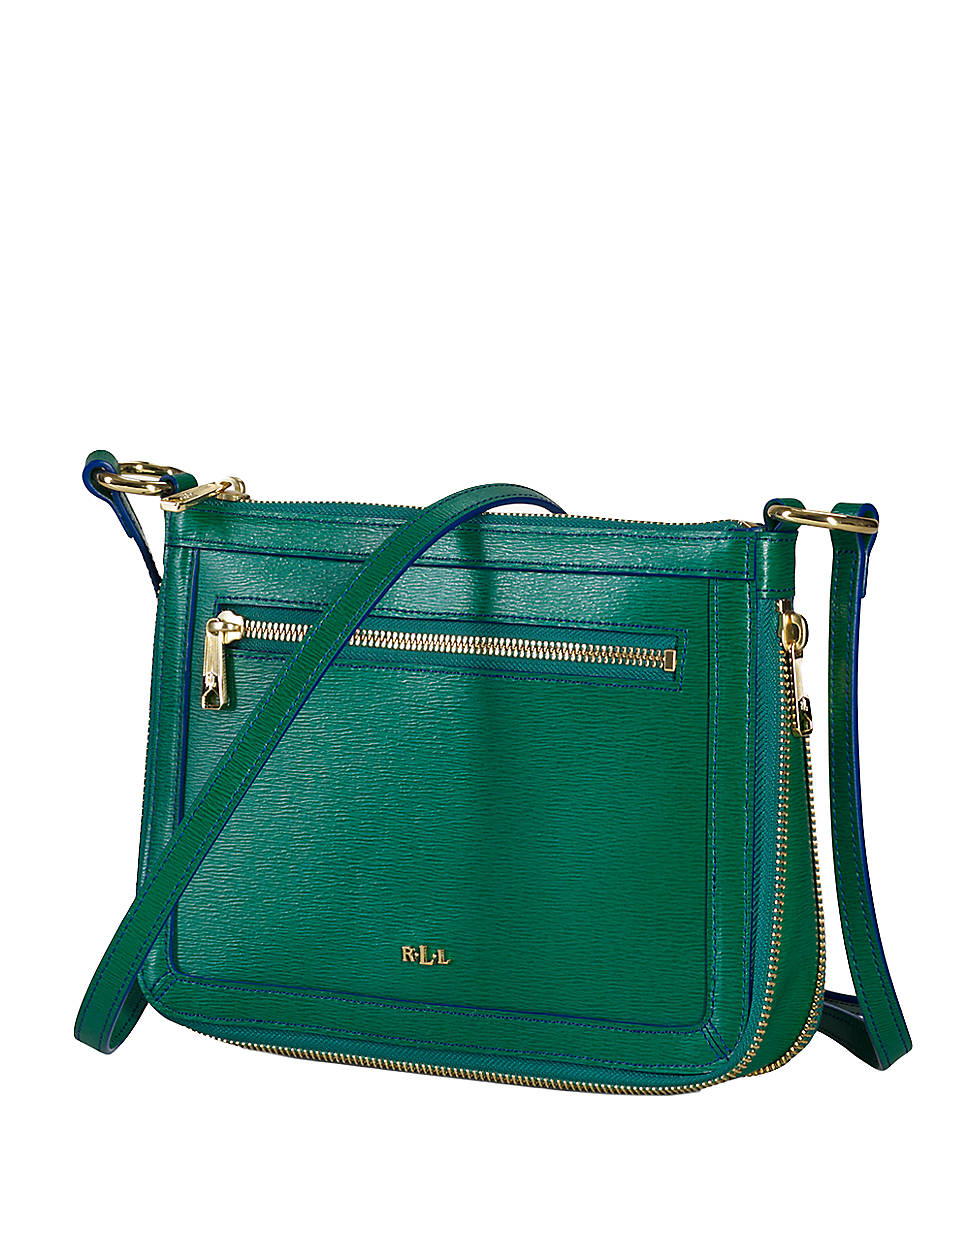 Lauren By Ralph Lauren Tate Flat Leather Crossbody Bag in Green ...